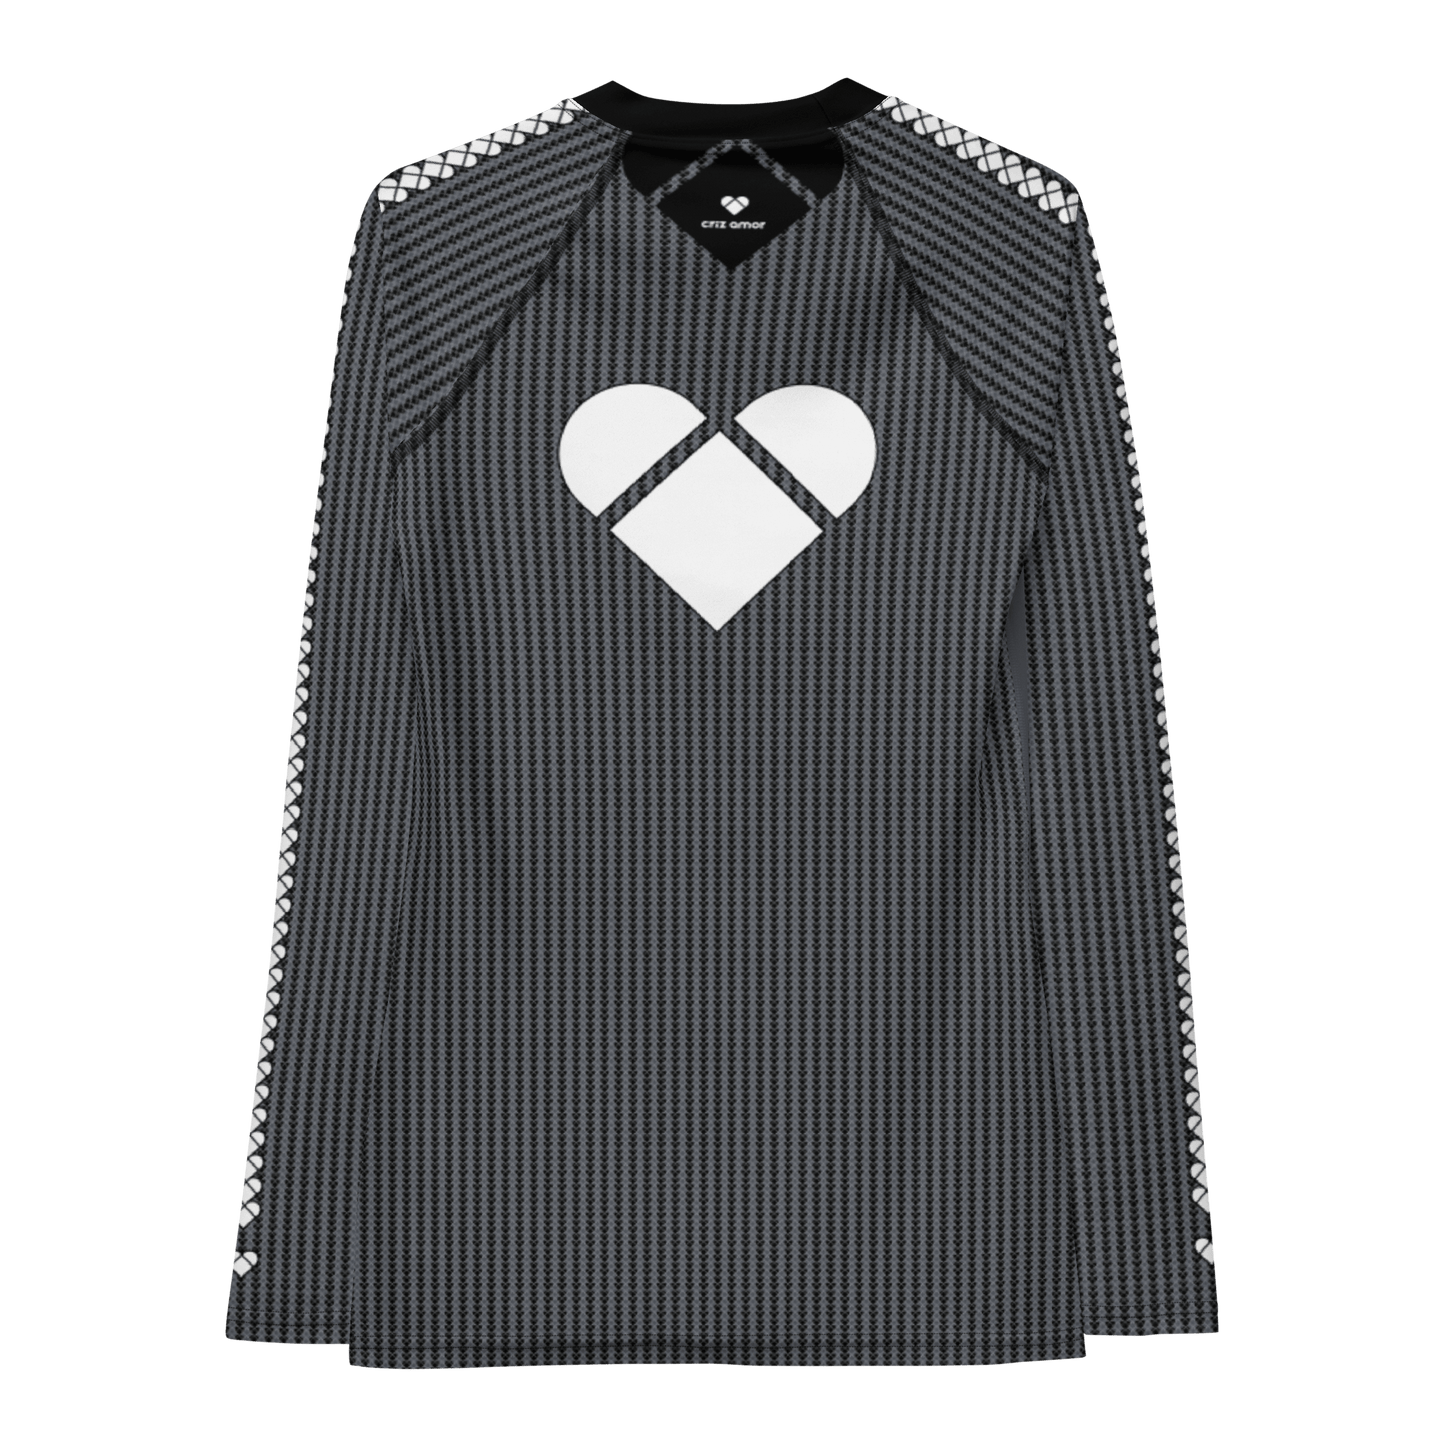 CRiZ AMOR's Lovogram Rash Guard: Fashion-forward sports wear with geometric heart pattern, big white heart